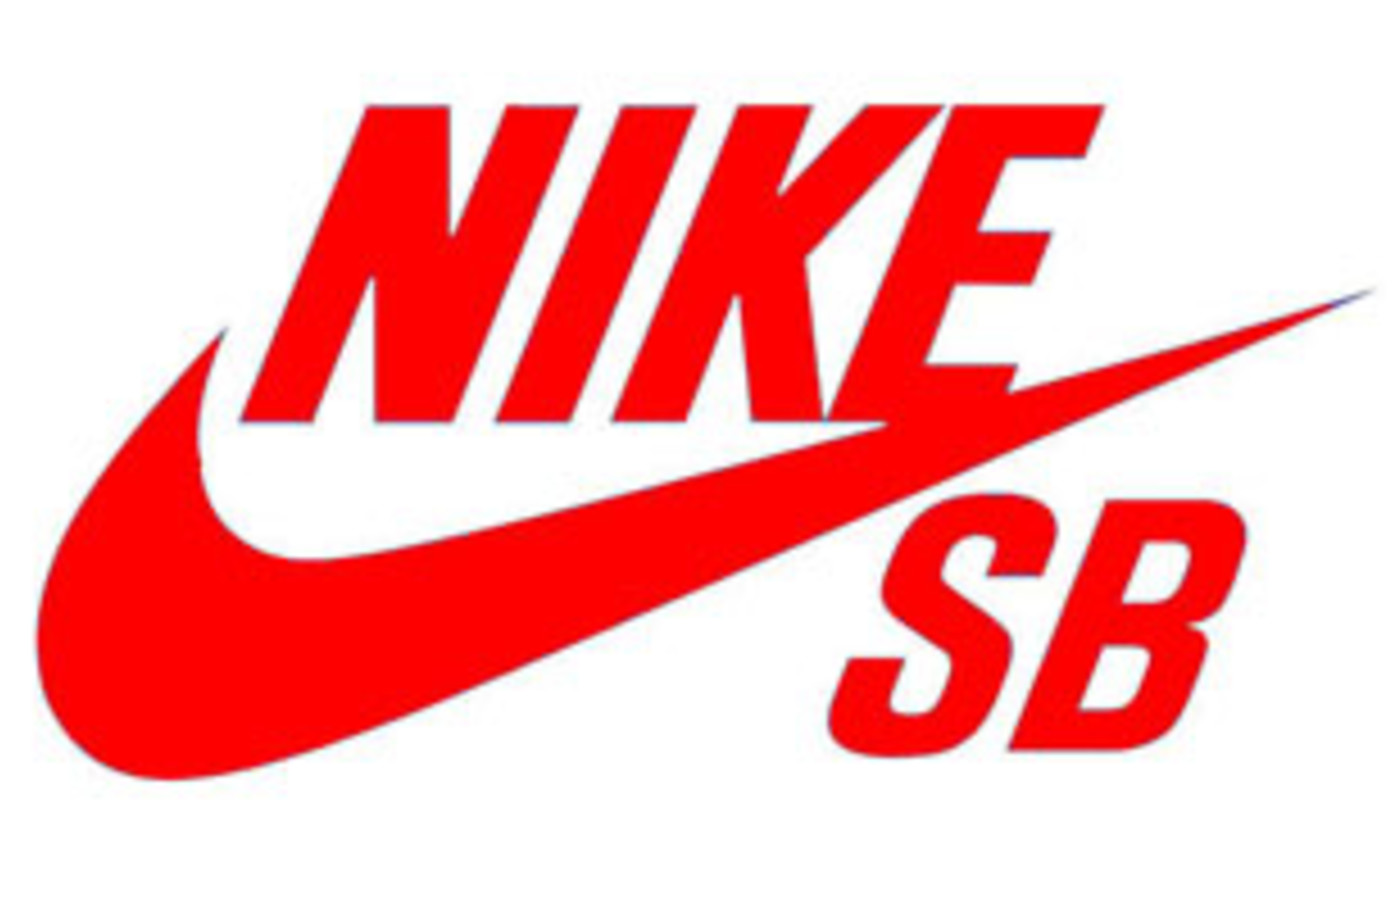 Nike Sb Logo Shop Clothing Shoes Online